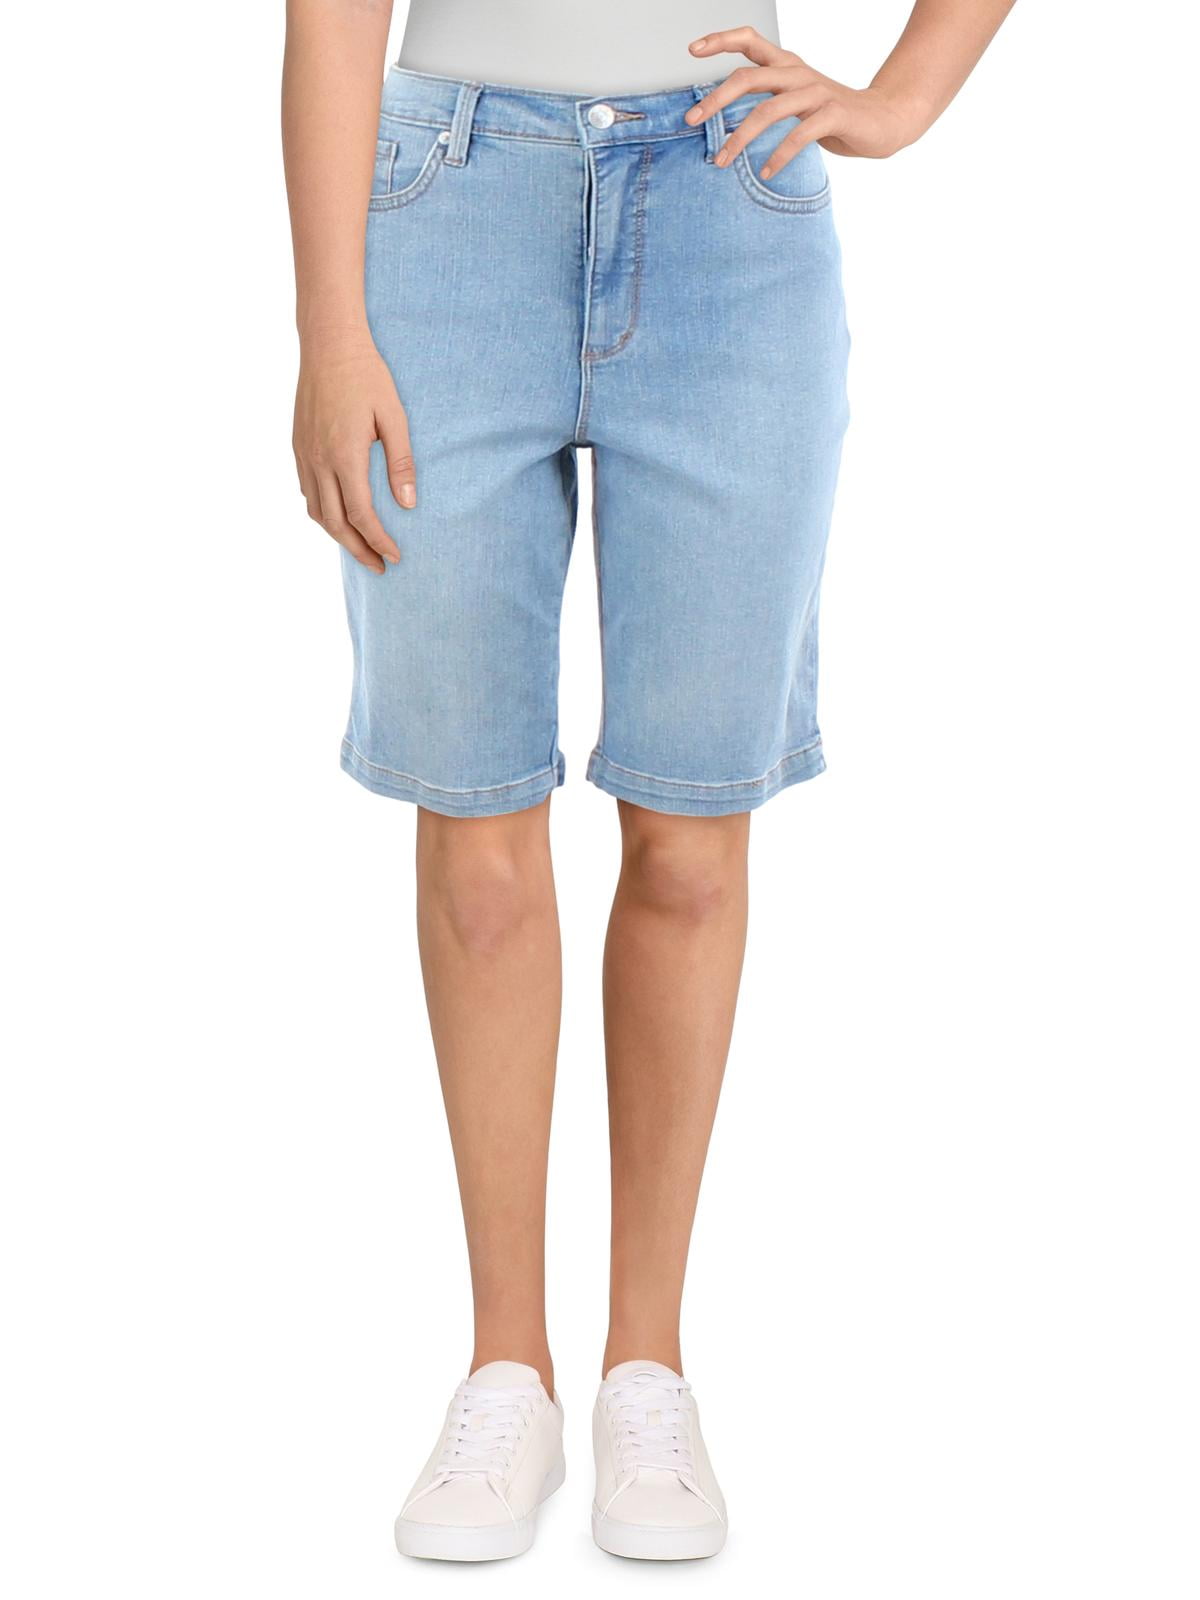 Yuwull Women's Mini Denim Skirts High Waist Irregular Slimming Jean Shorts  Denim Culottes Short Summer Trendy Jean Skirt Gray - Walmart.com